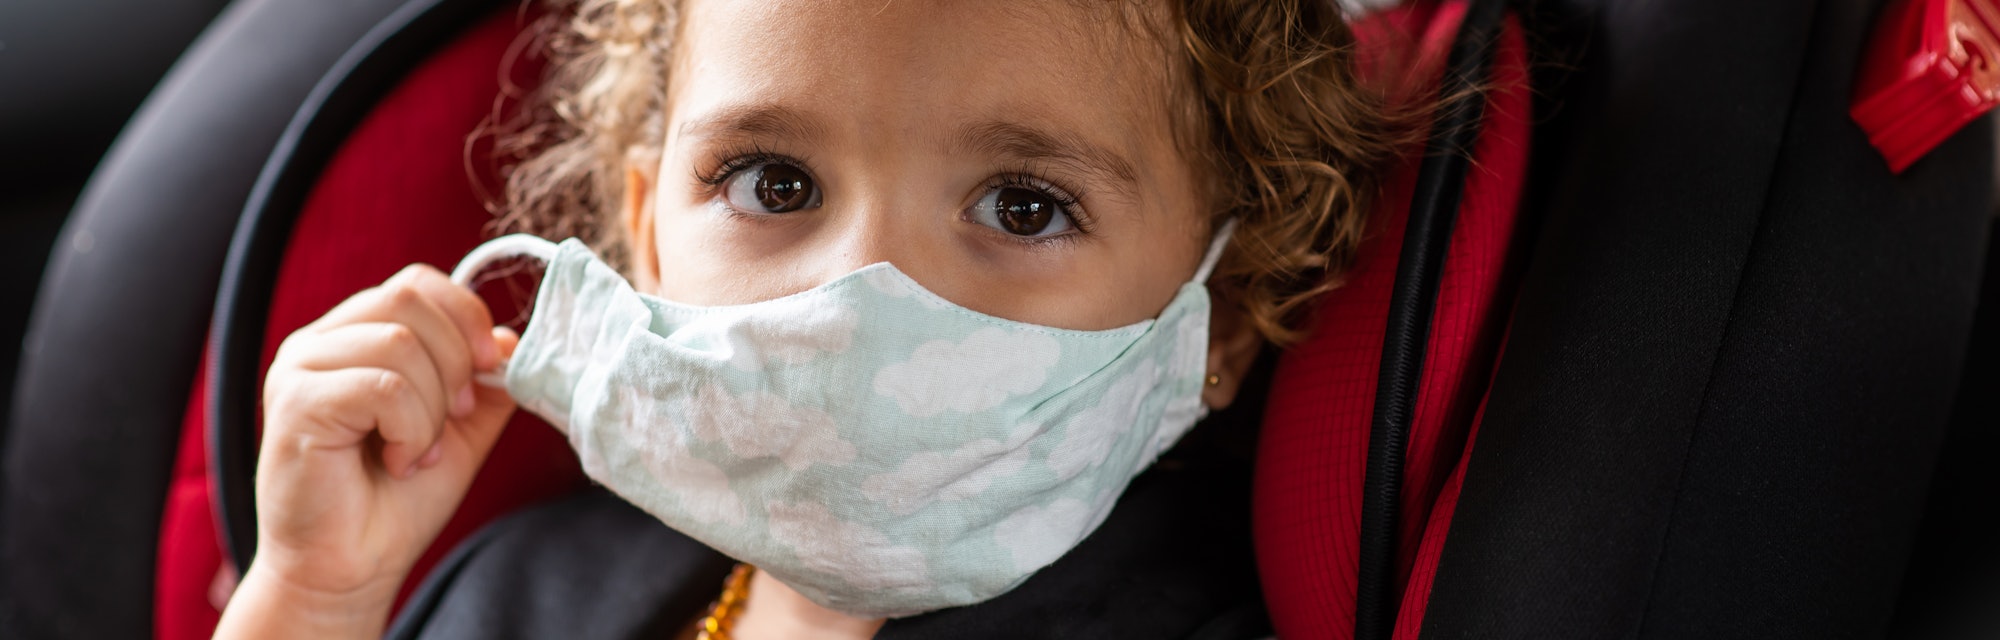 Child wearing face mask - coronavirus